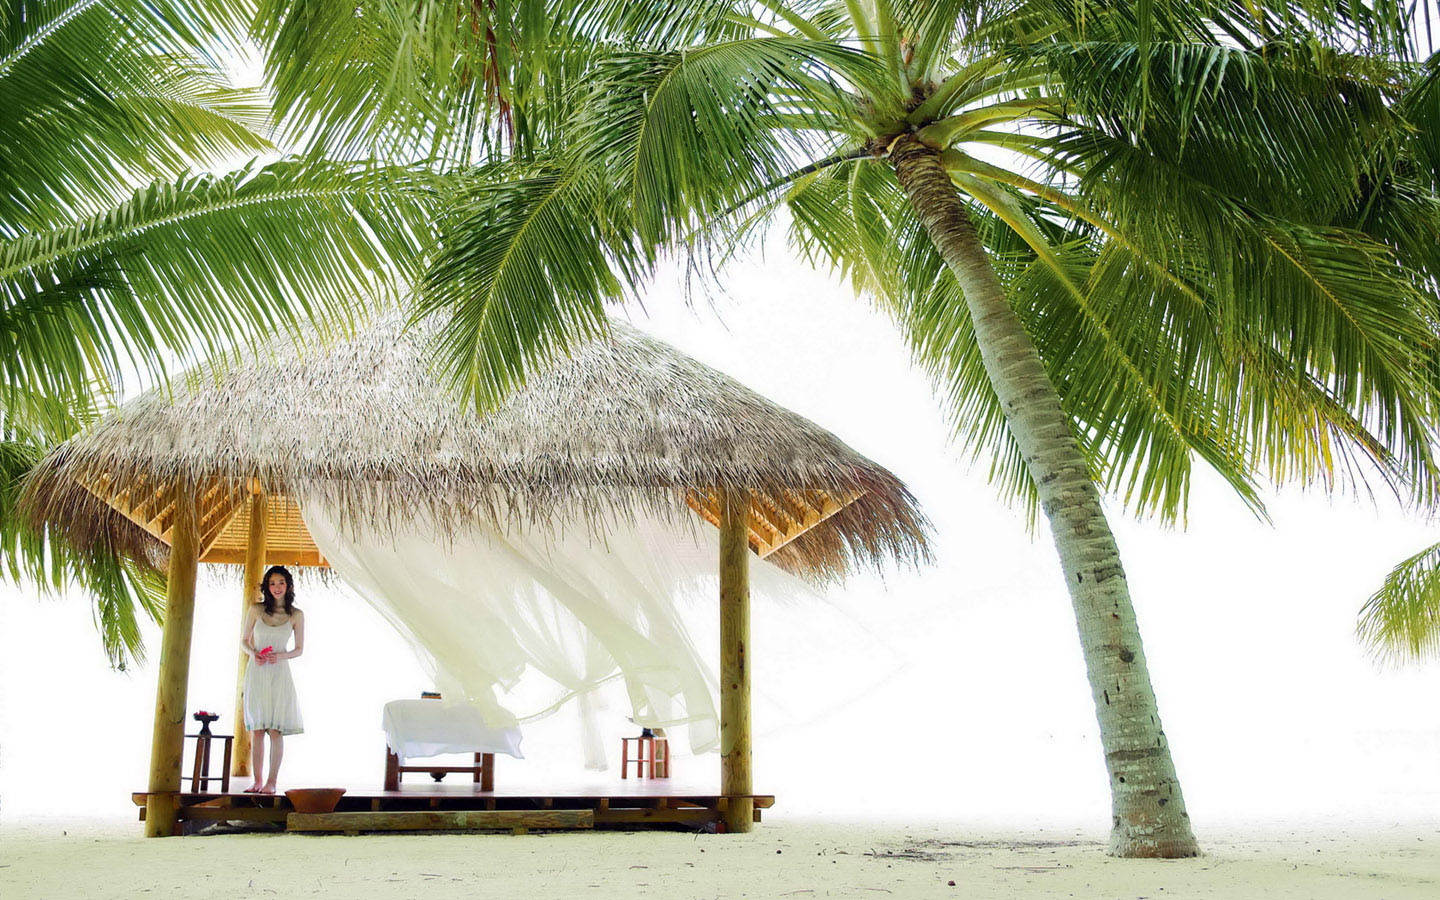 Seaside Coconut Tree Landscape Desktop Background